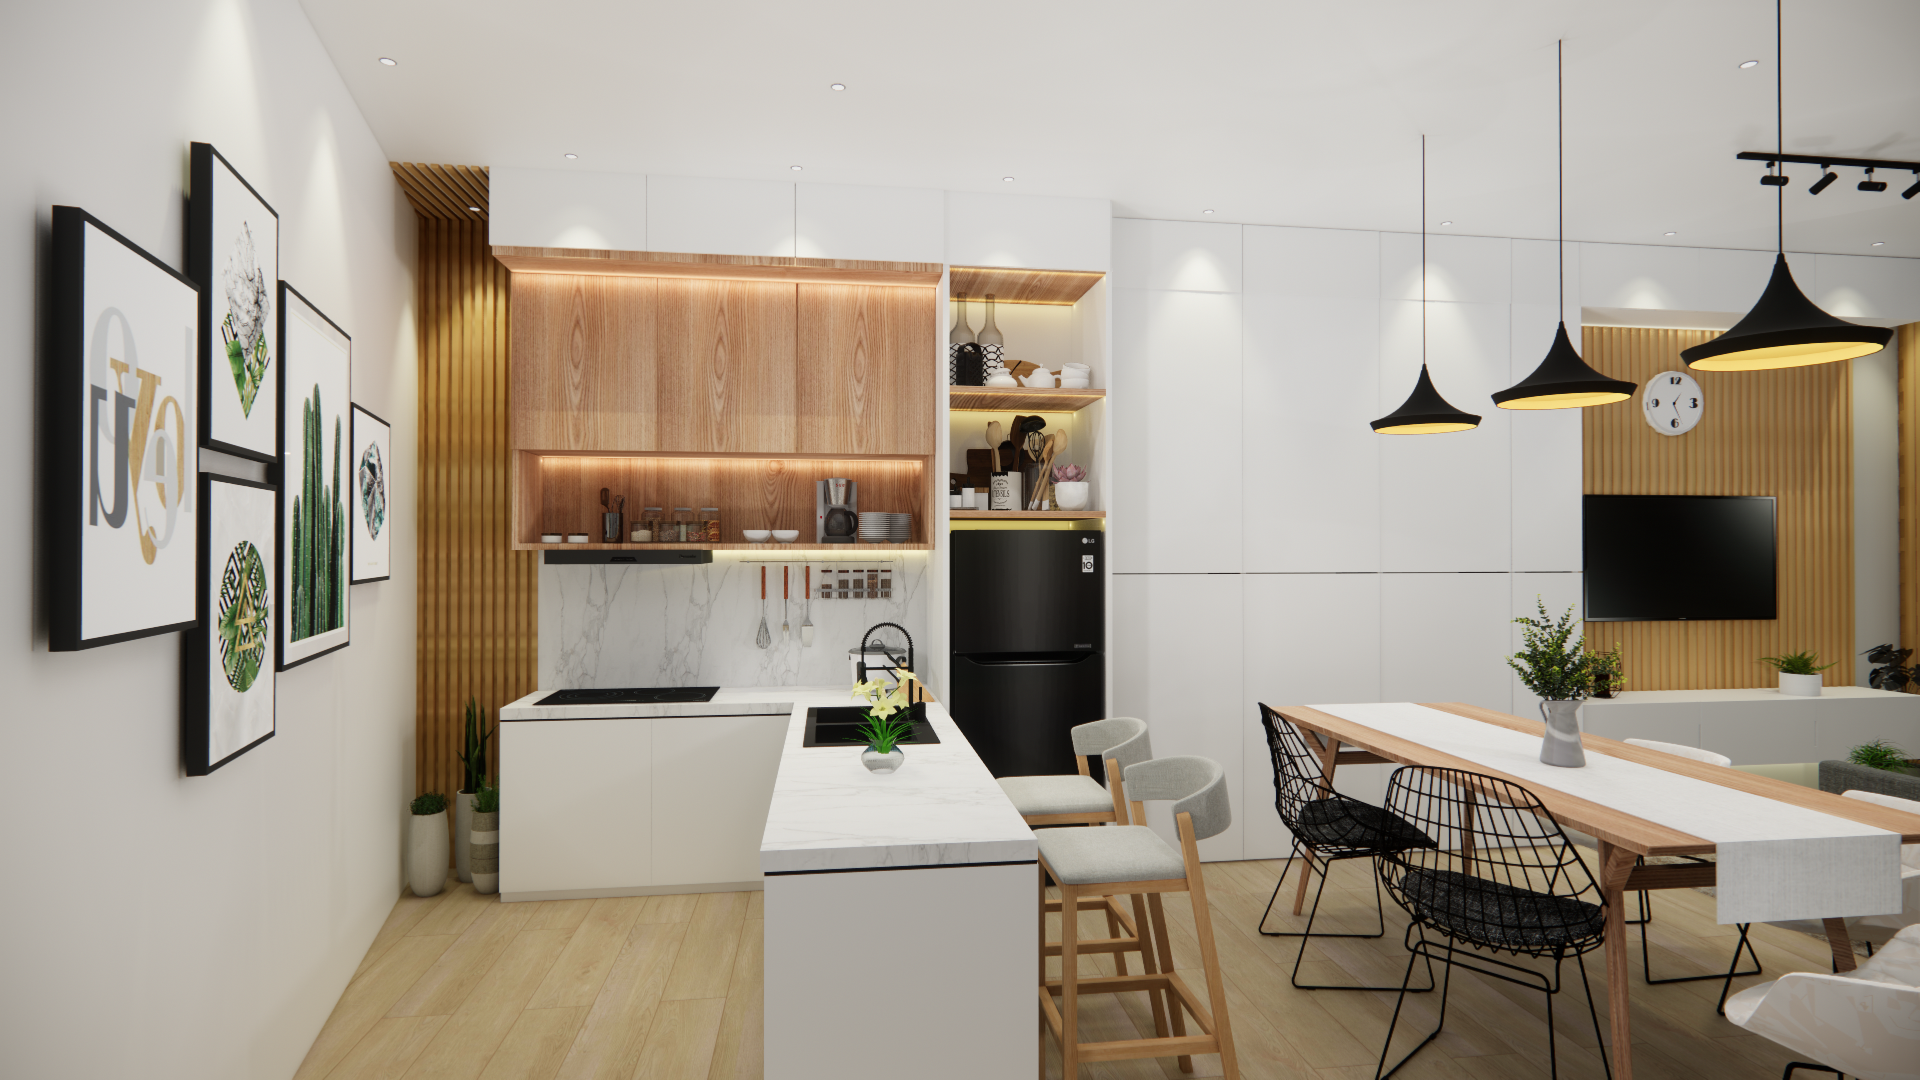 design interior kitchen set malang